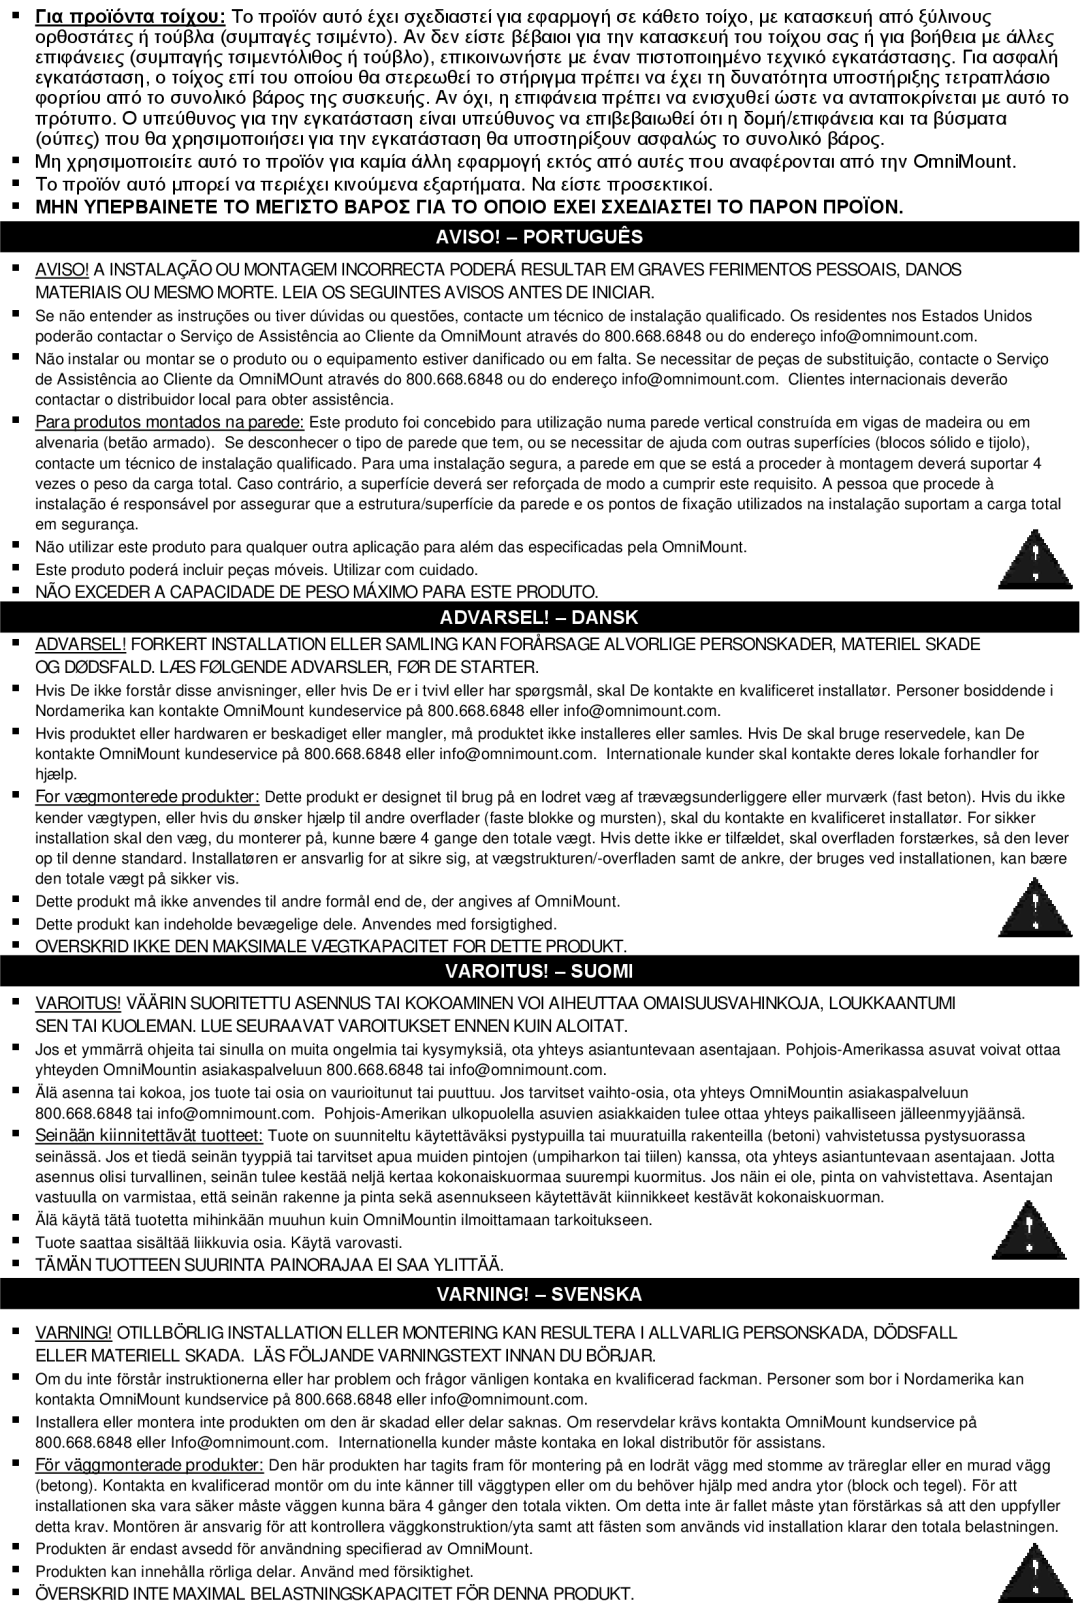 Omnimount MWFS, UL10021ULN instruction manual Aviso! - Português, Advarsel! - Dansk, Varoitus! - Suomi, Varning! - Svenska 